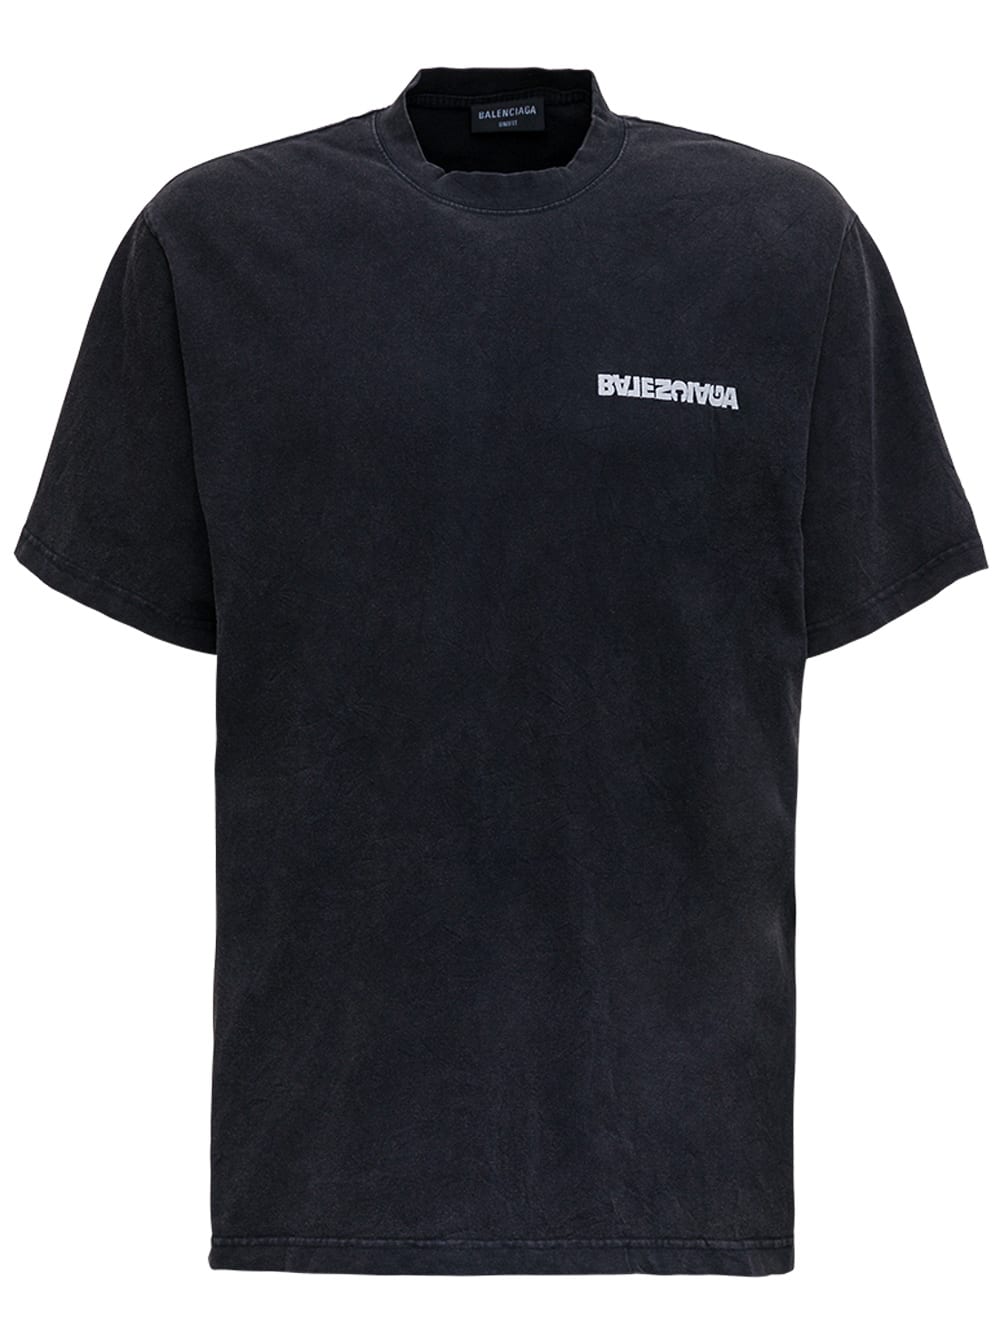 Balenciaga Black Cotton T-shirt With Logo Print